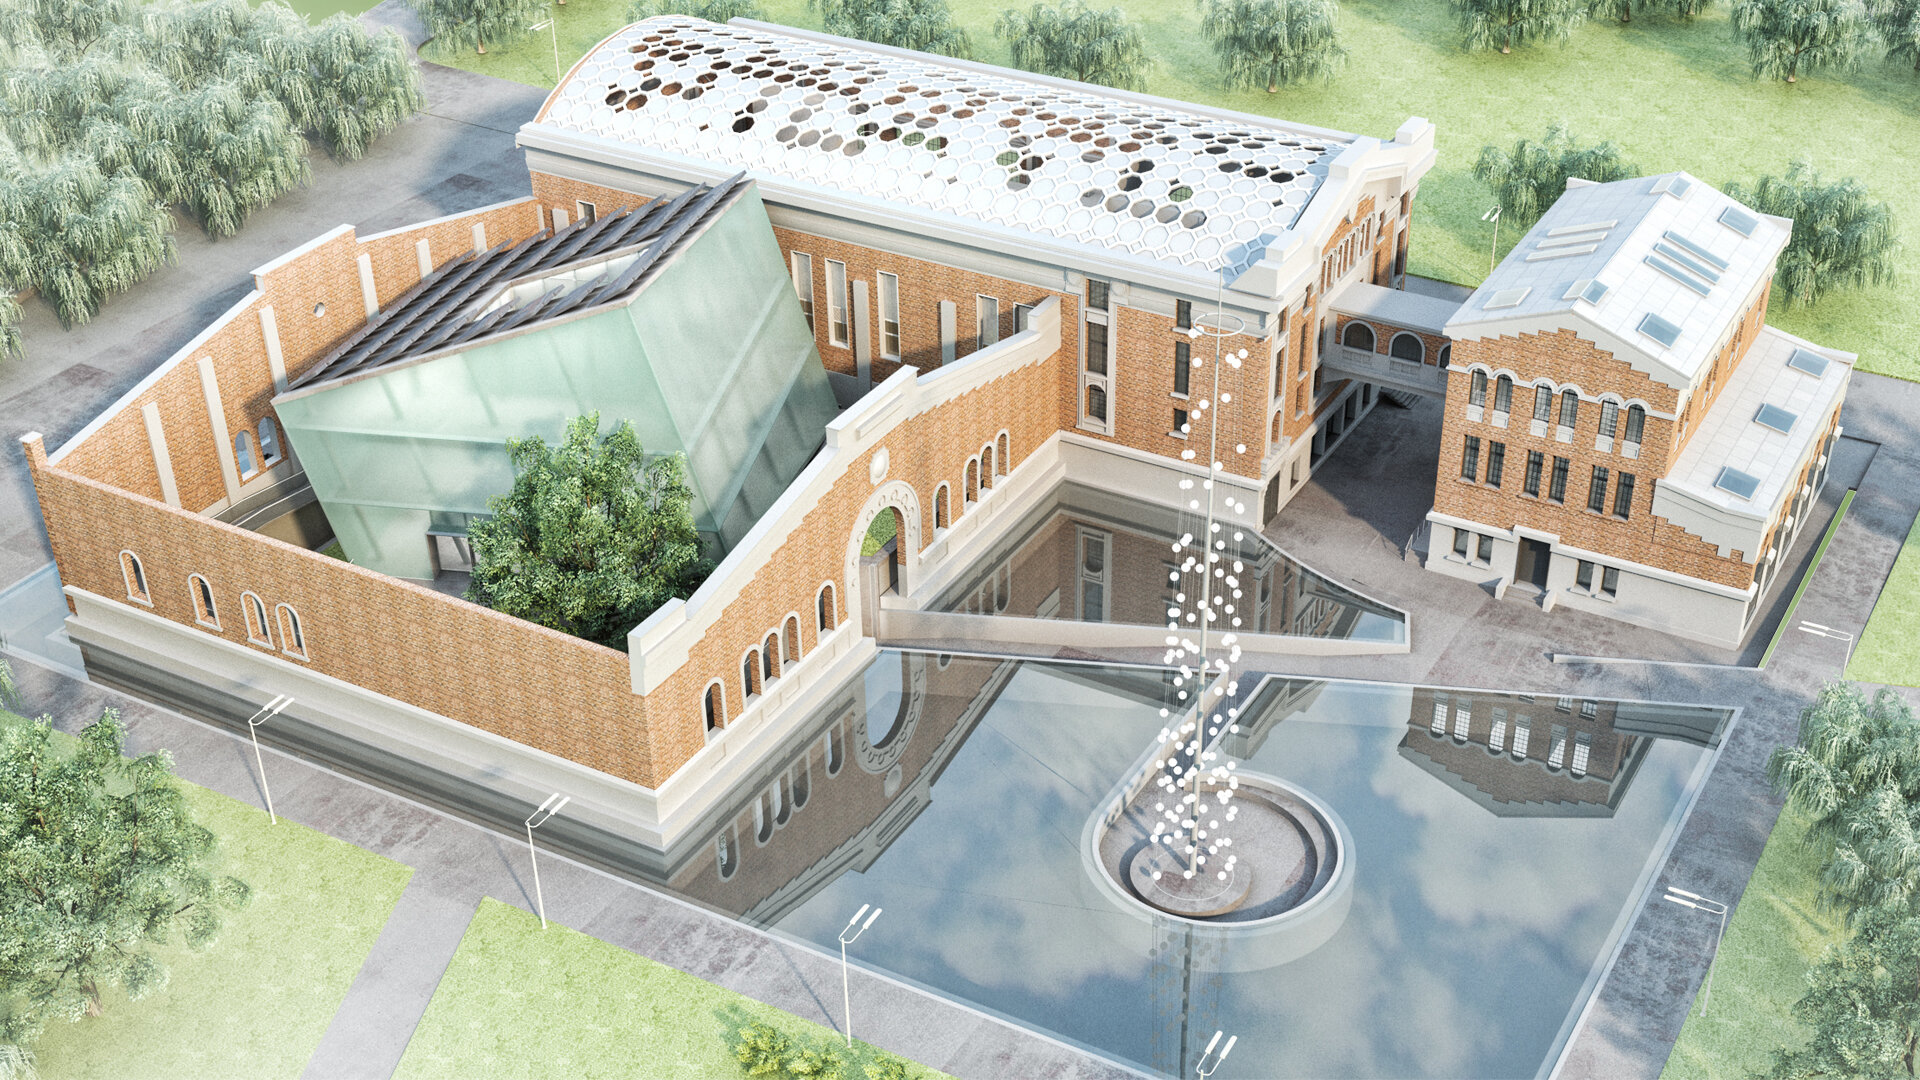 Nanotechnology Research Center – Floresti power plant conversion